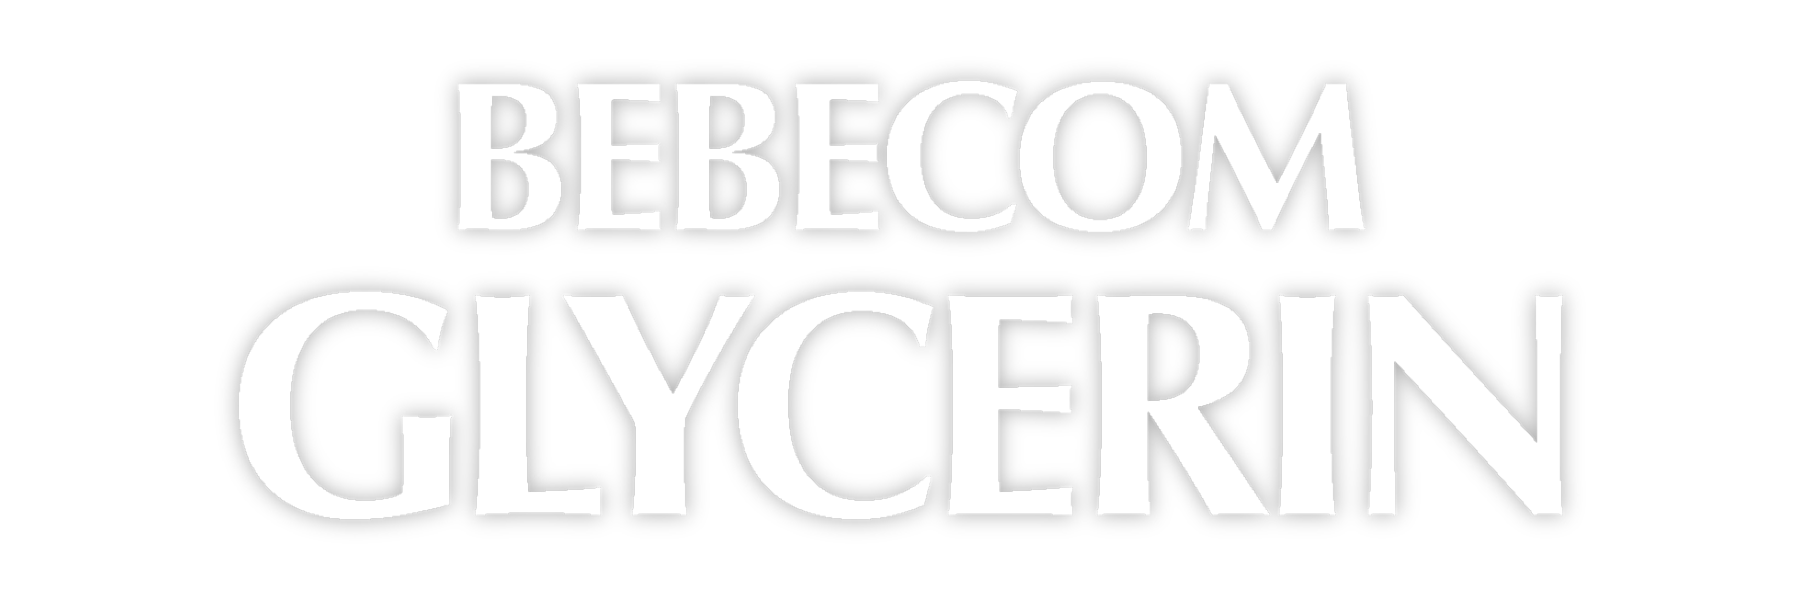 Bebecom Glycerin Brand Logo